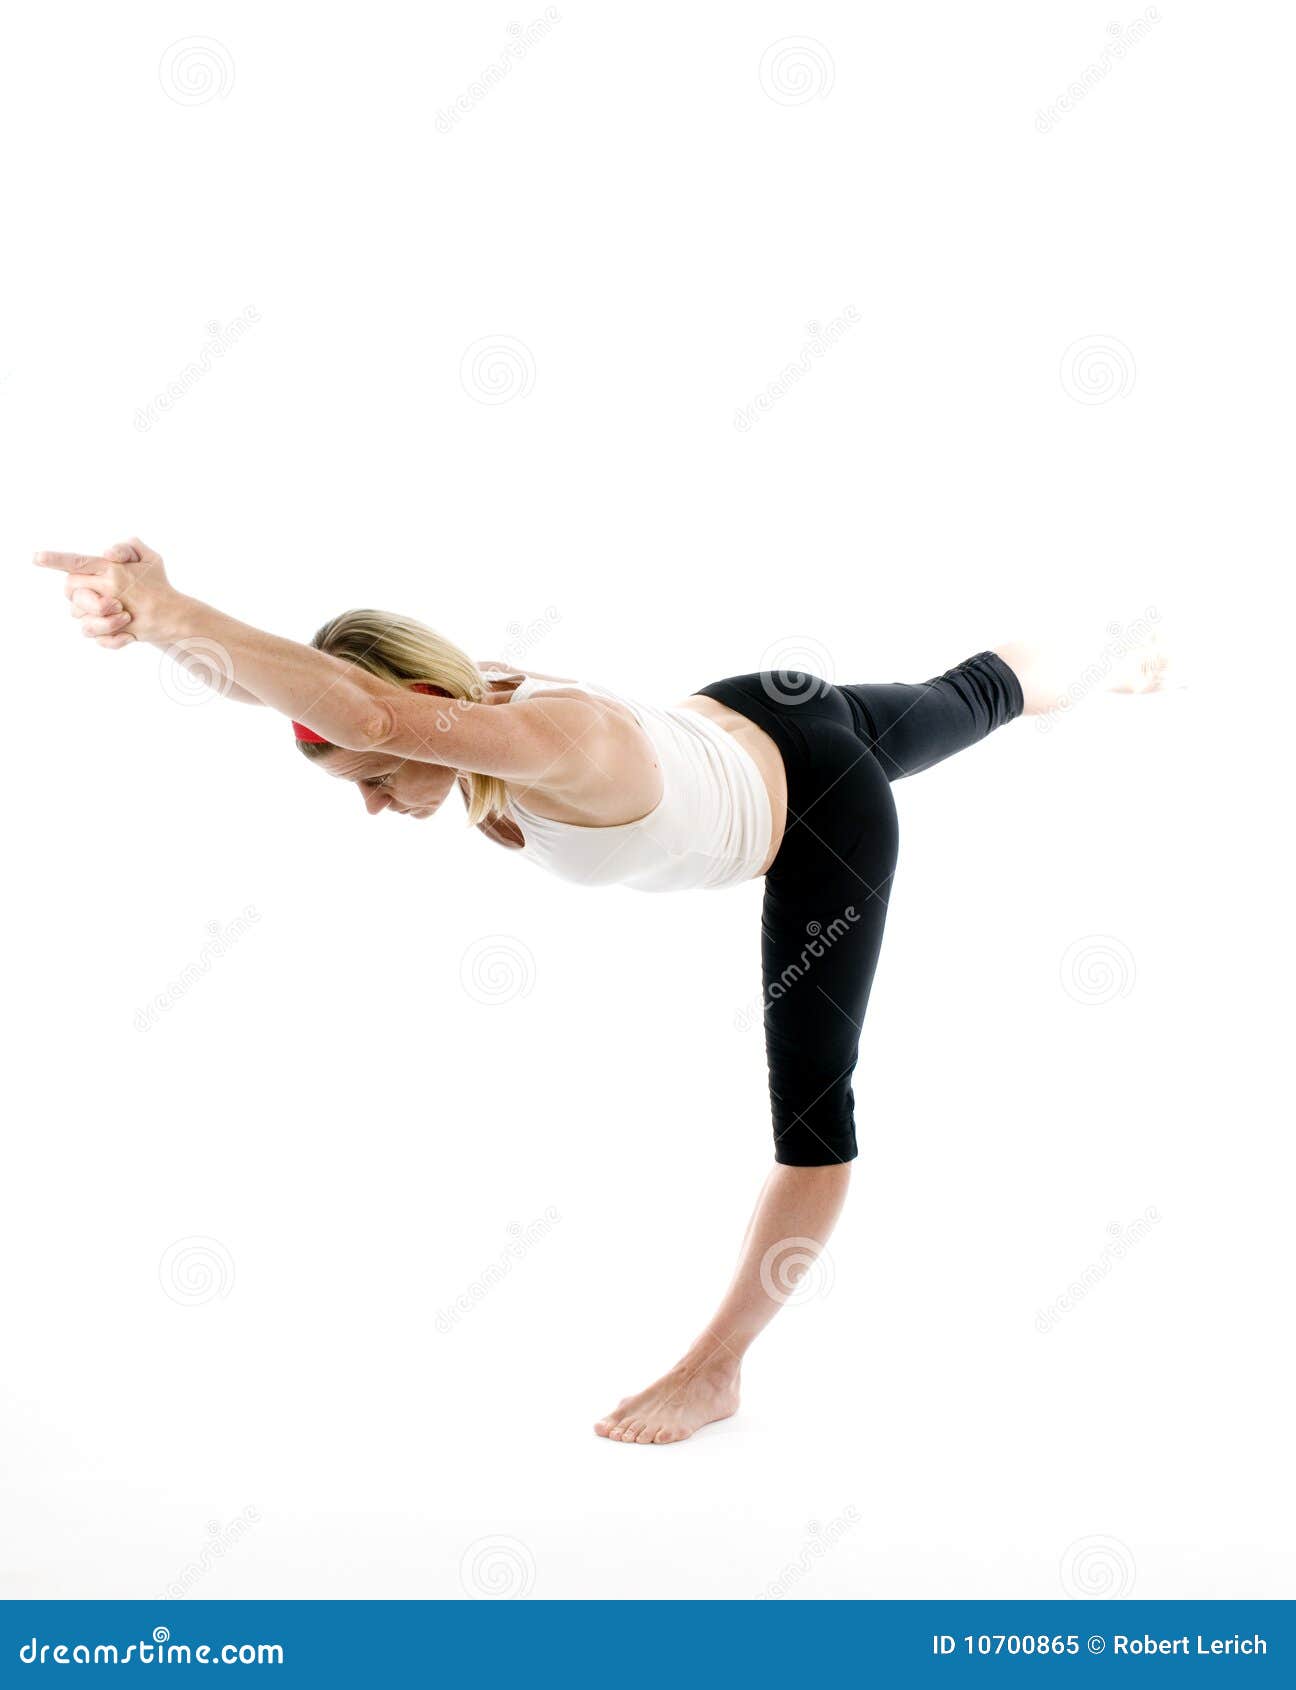 Balancing stick yoga pose stock image. Image of balancing - 10700865